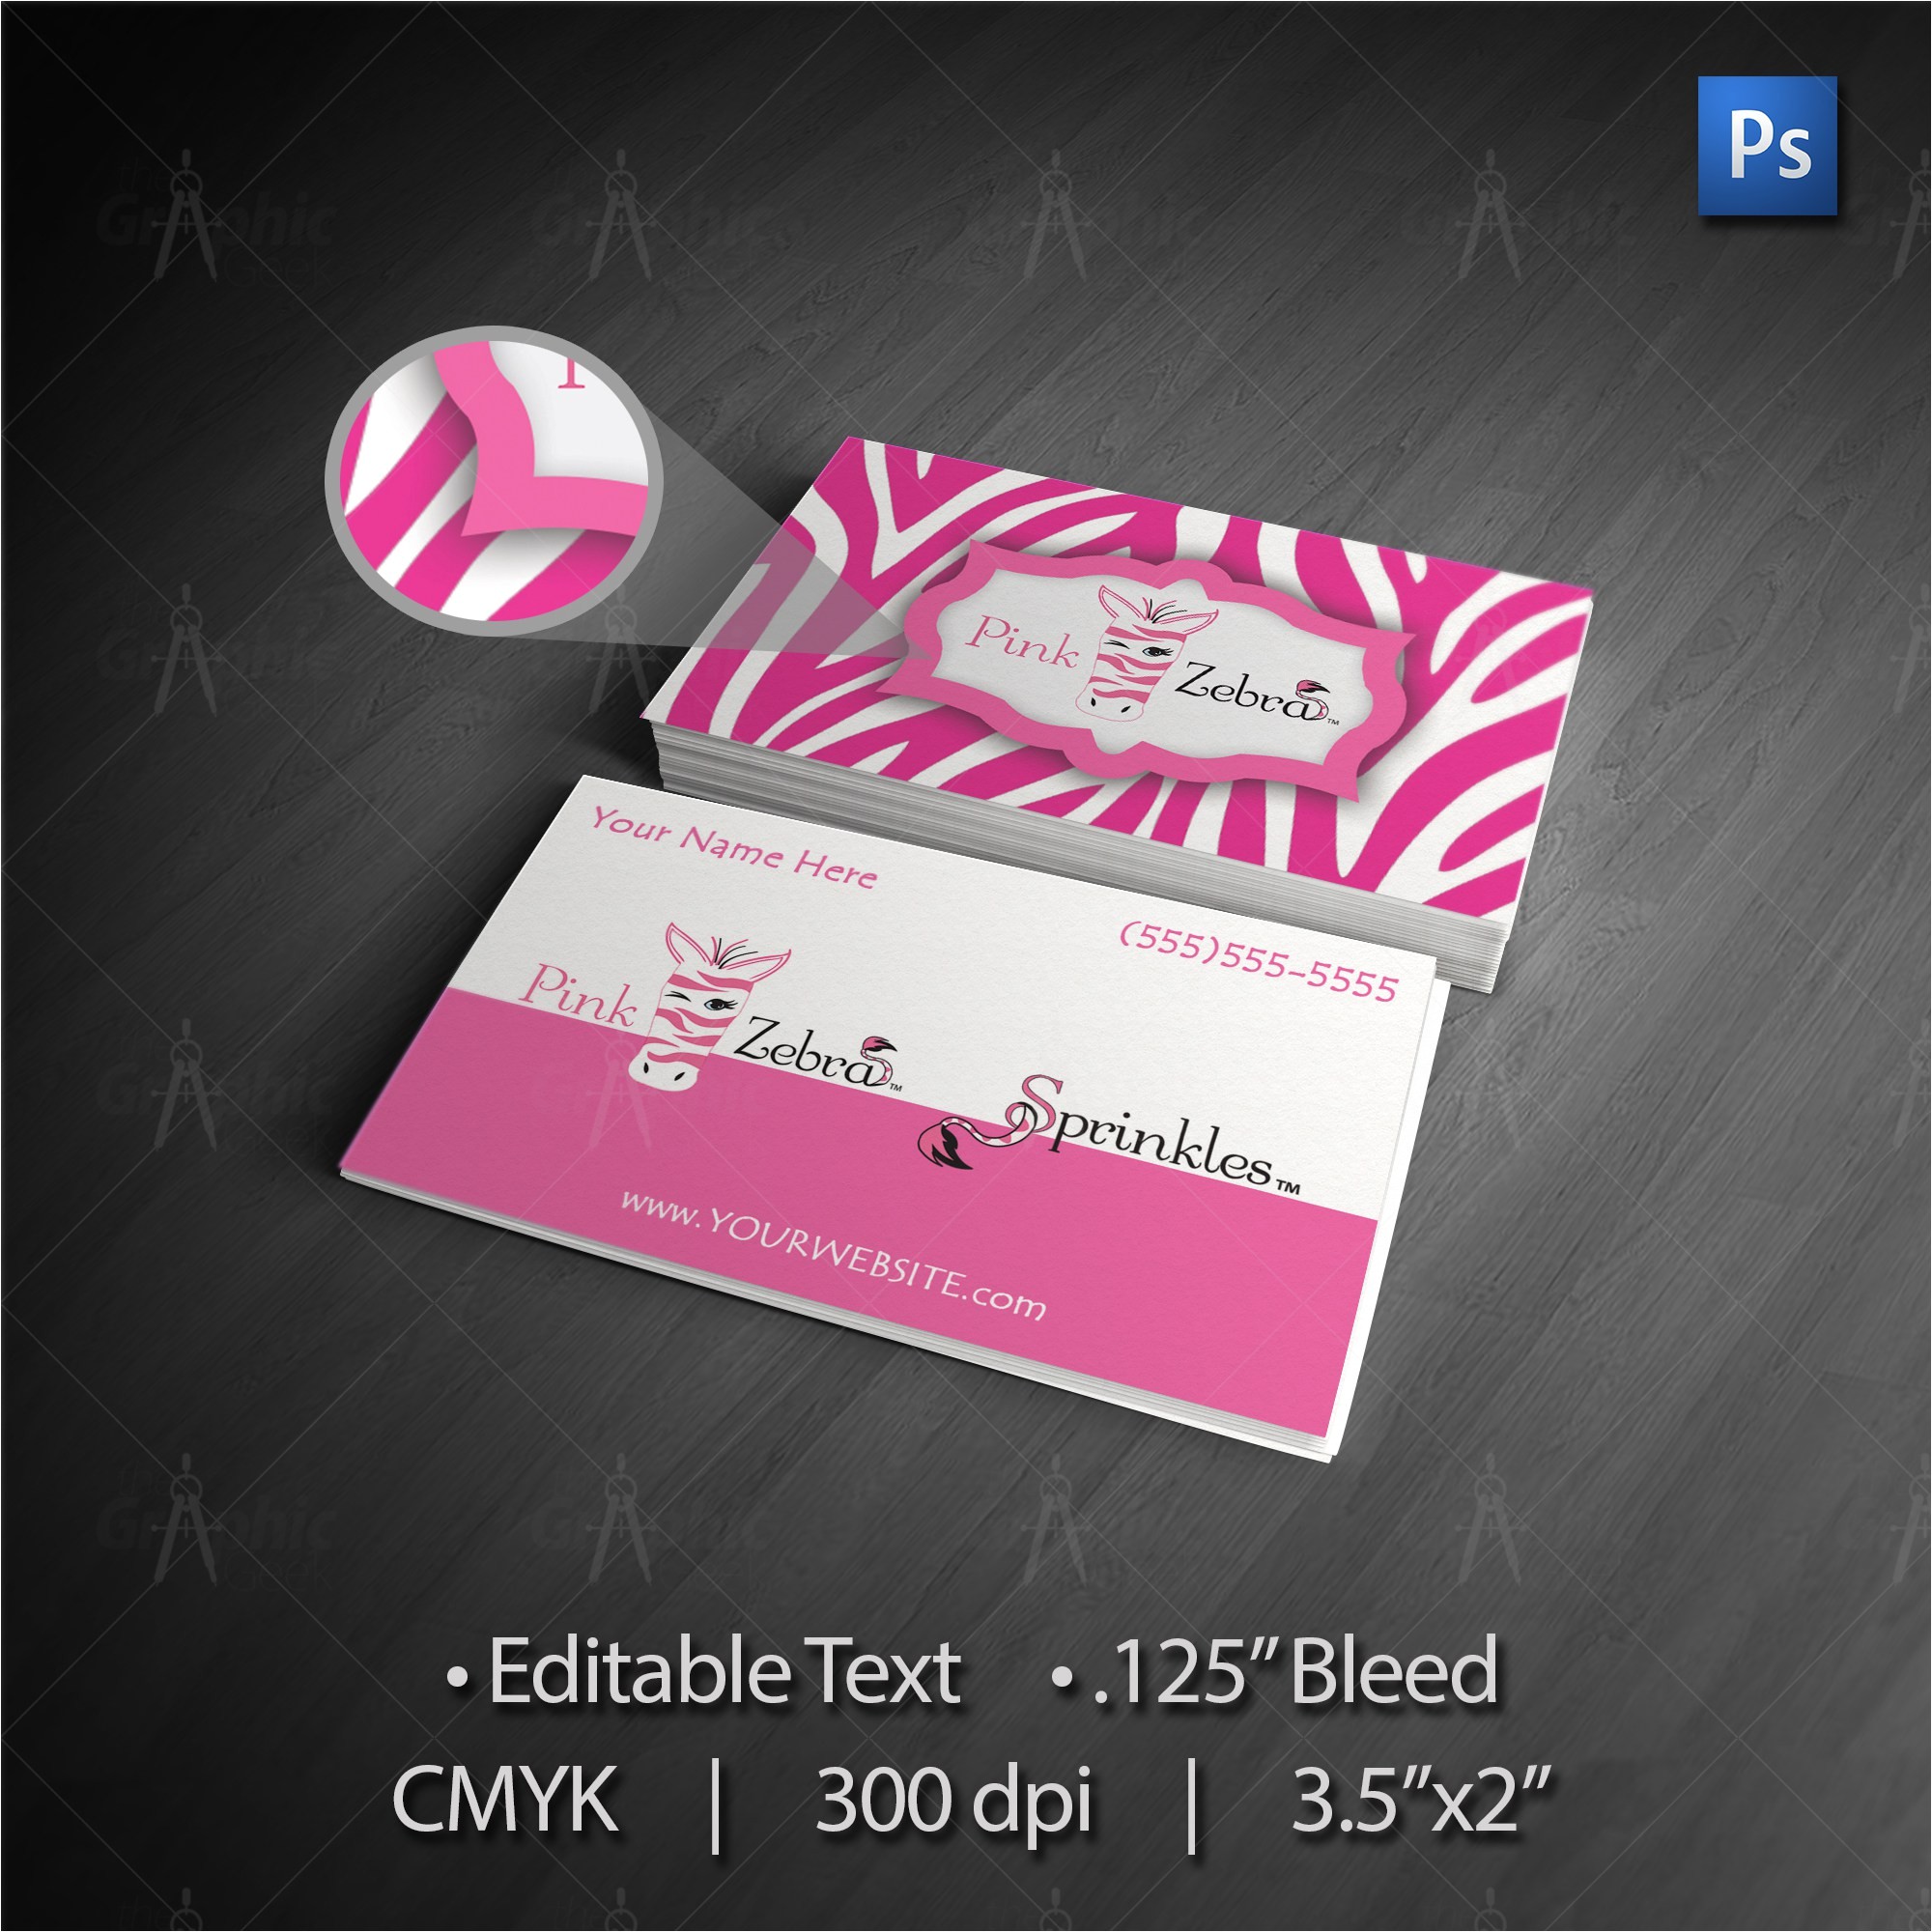 pink zebra business card photoshop template